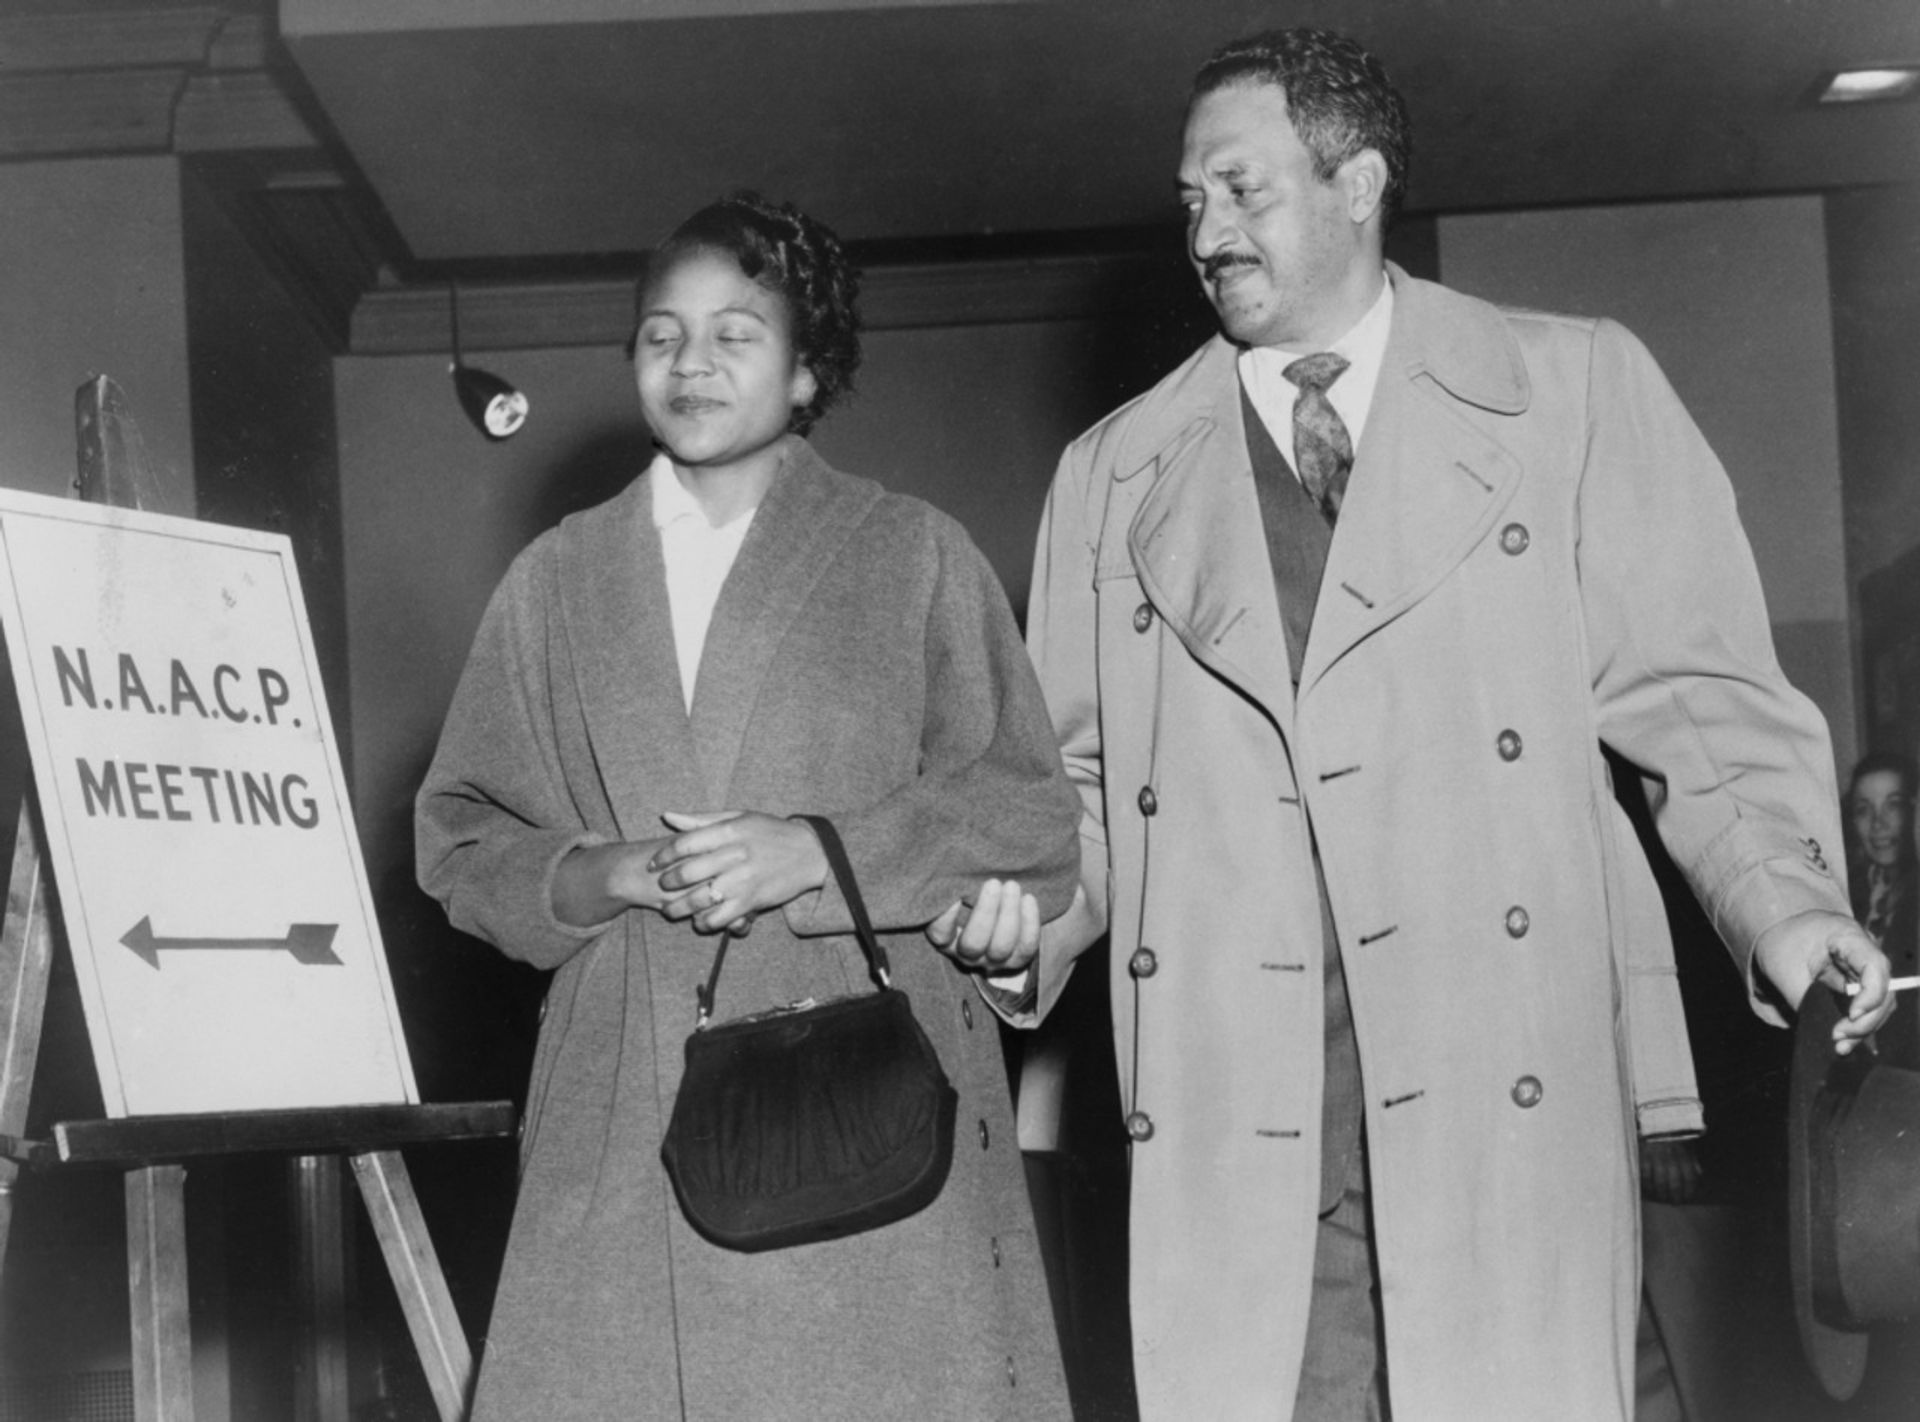 Thurgood Marshall and Rosa Parks Print